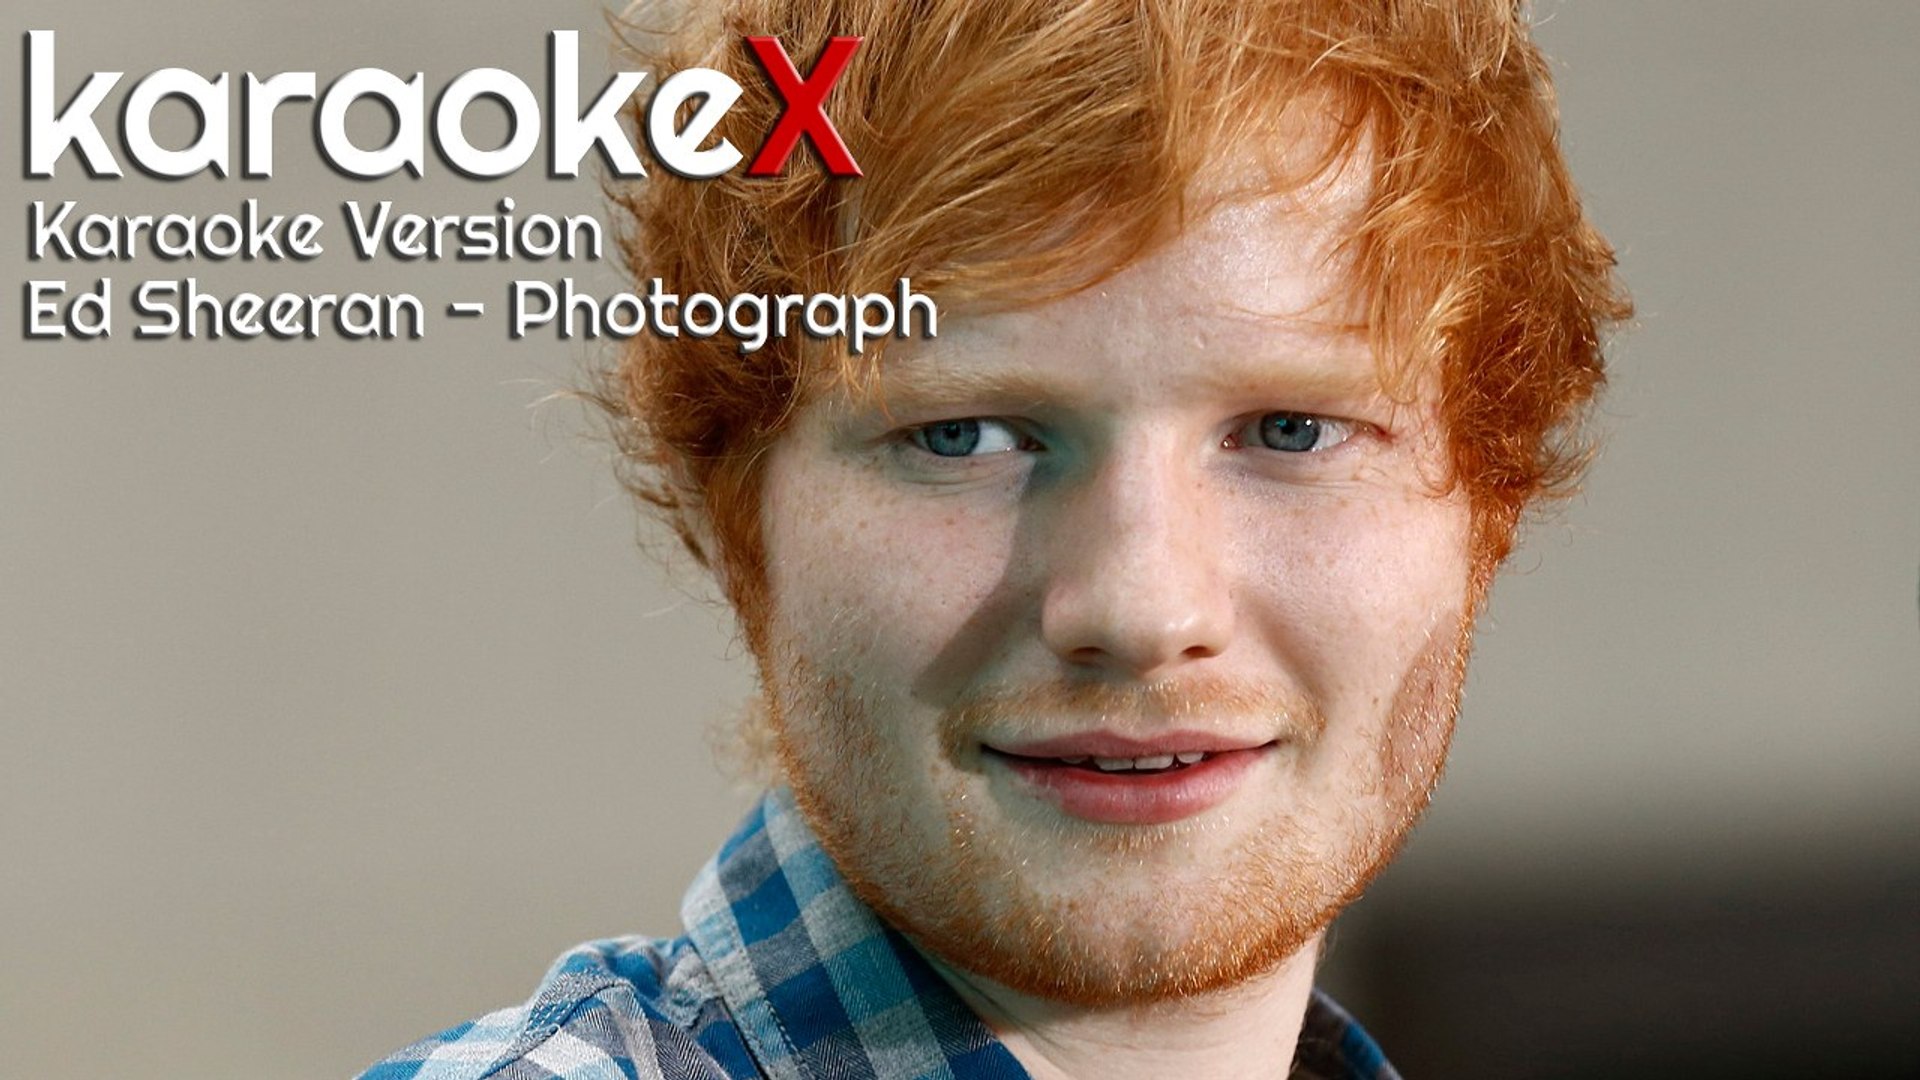 Ed Sheeran - Photograph Karaoke Version (KaraokeX)